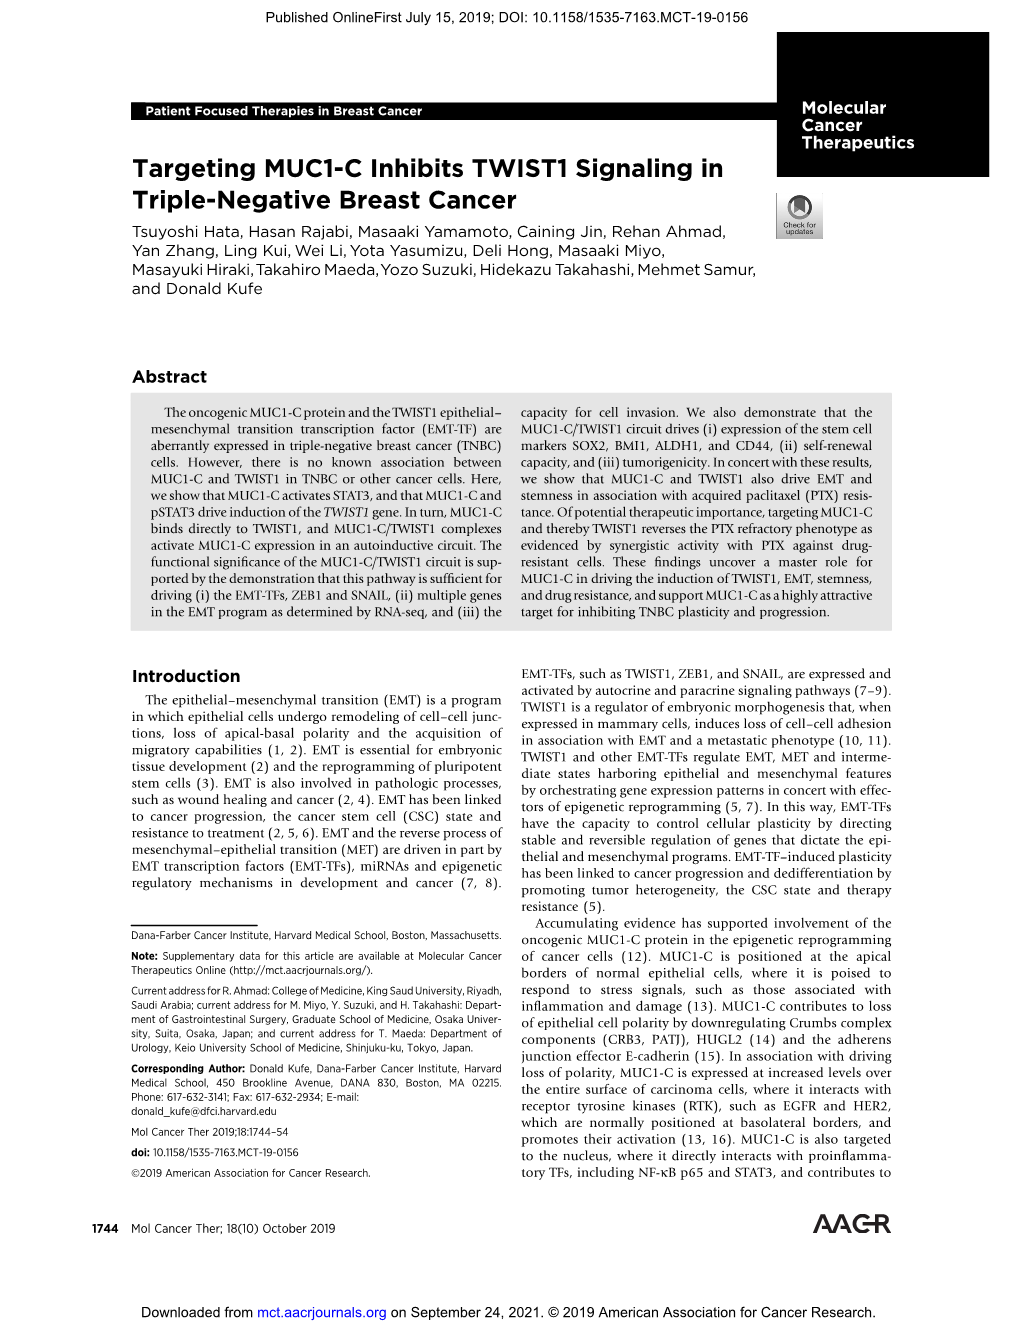 Targeting MUC1-C Inhibits TWIST1 Signaling in Triple-Negative Breast